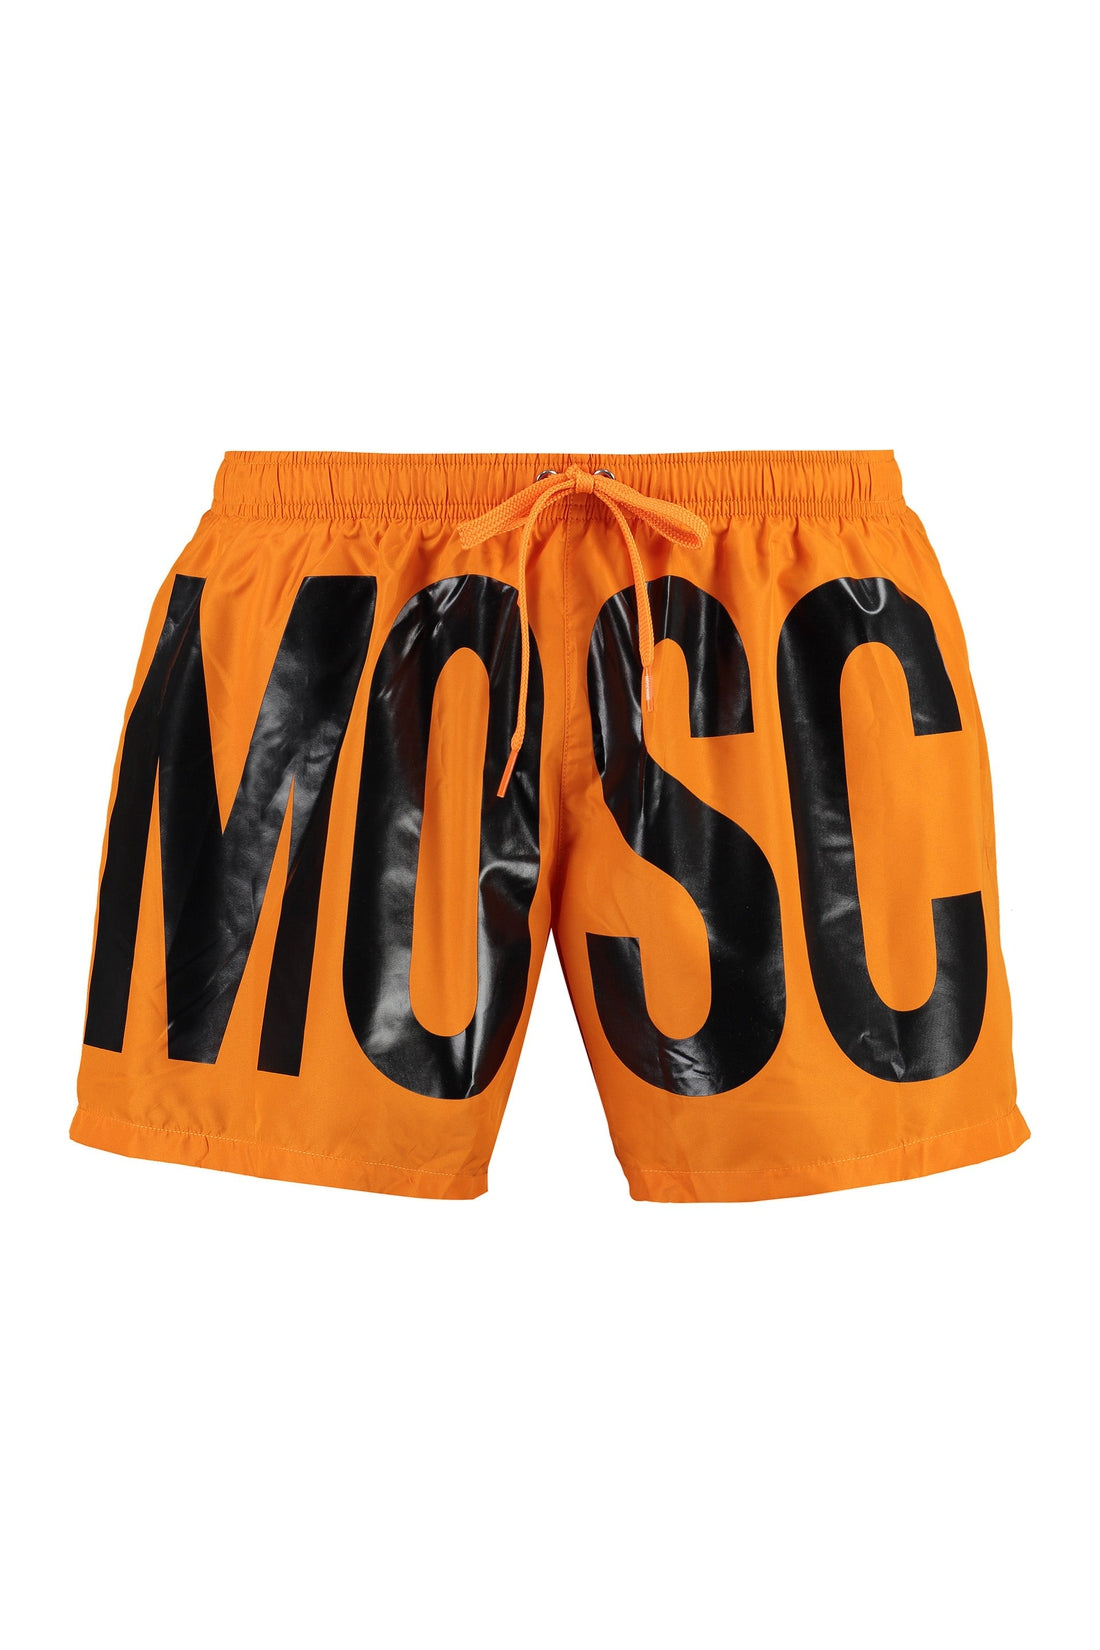 Moschino-OUTLET-SALE-Logo print swim shorts-ARCHIVIST